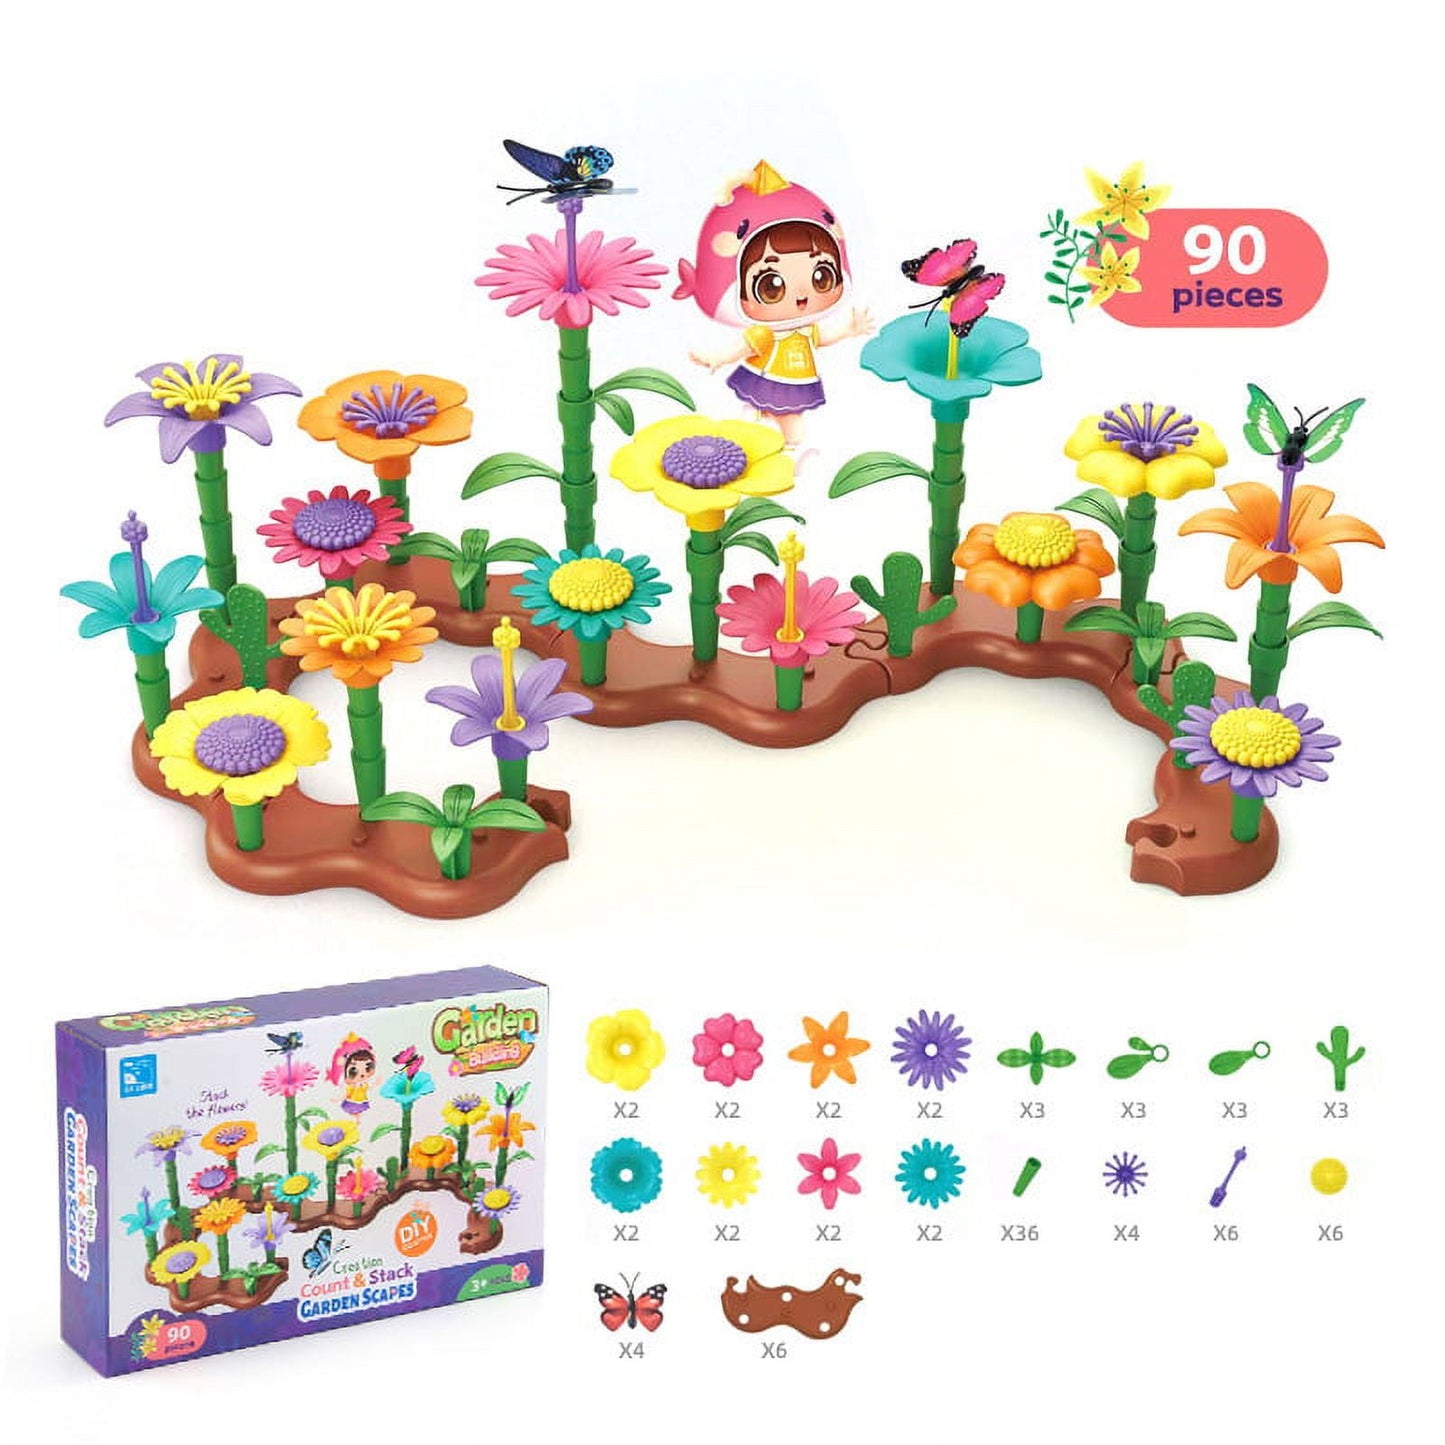 DIY Flower Garden Building Toys, Growing Flower Blocks Playset for Kids, Preschool Educational Set for Age 3-7 Years Boys Girls - 90PCS